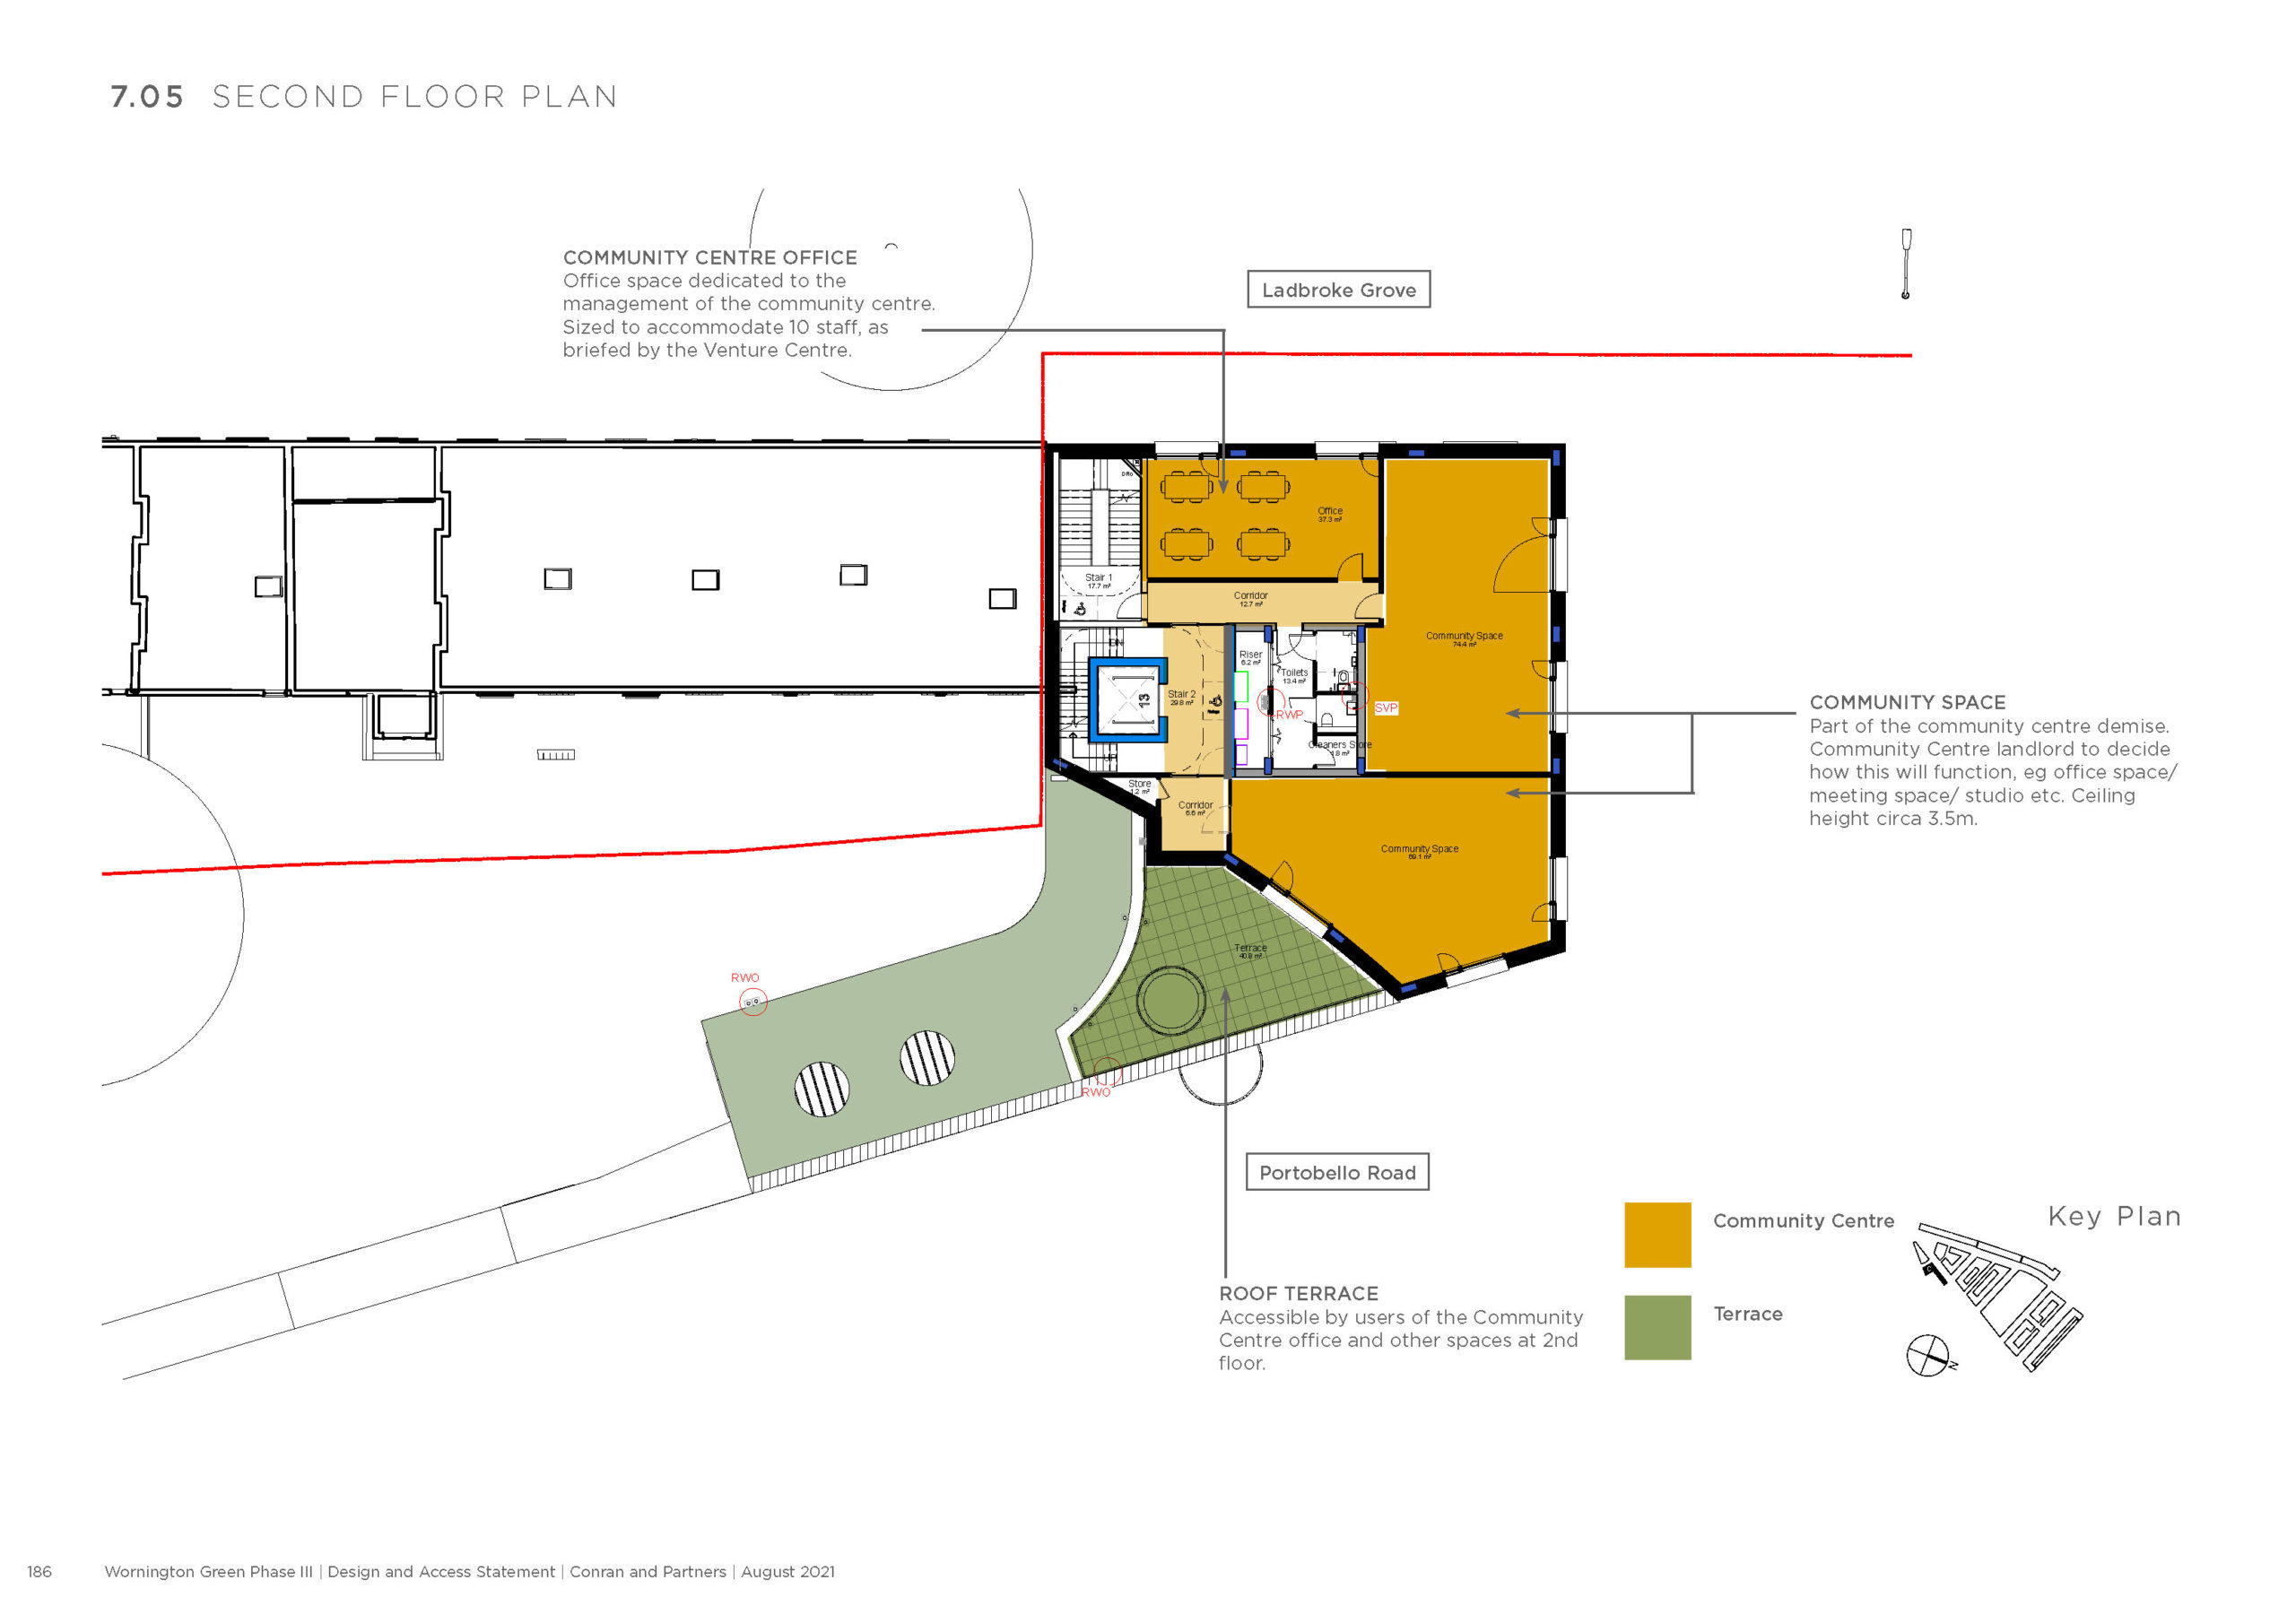 Community Centre - Second floor plan